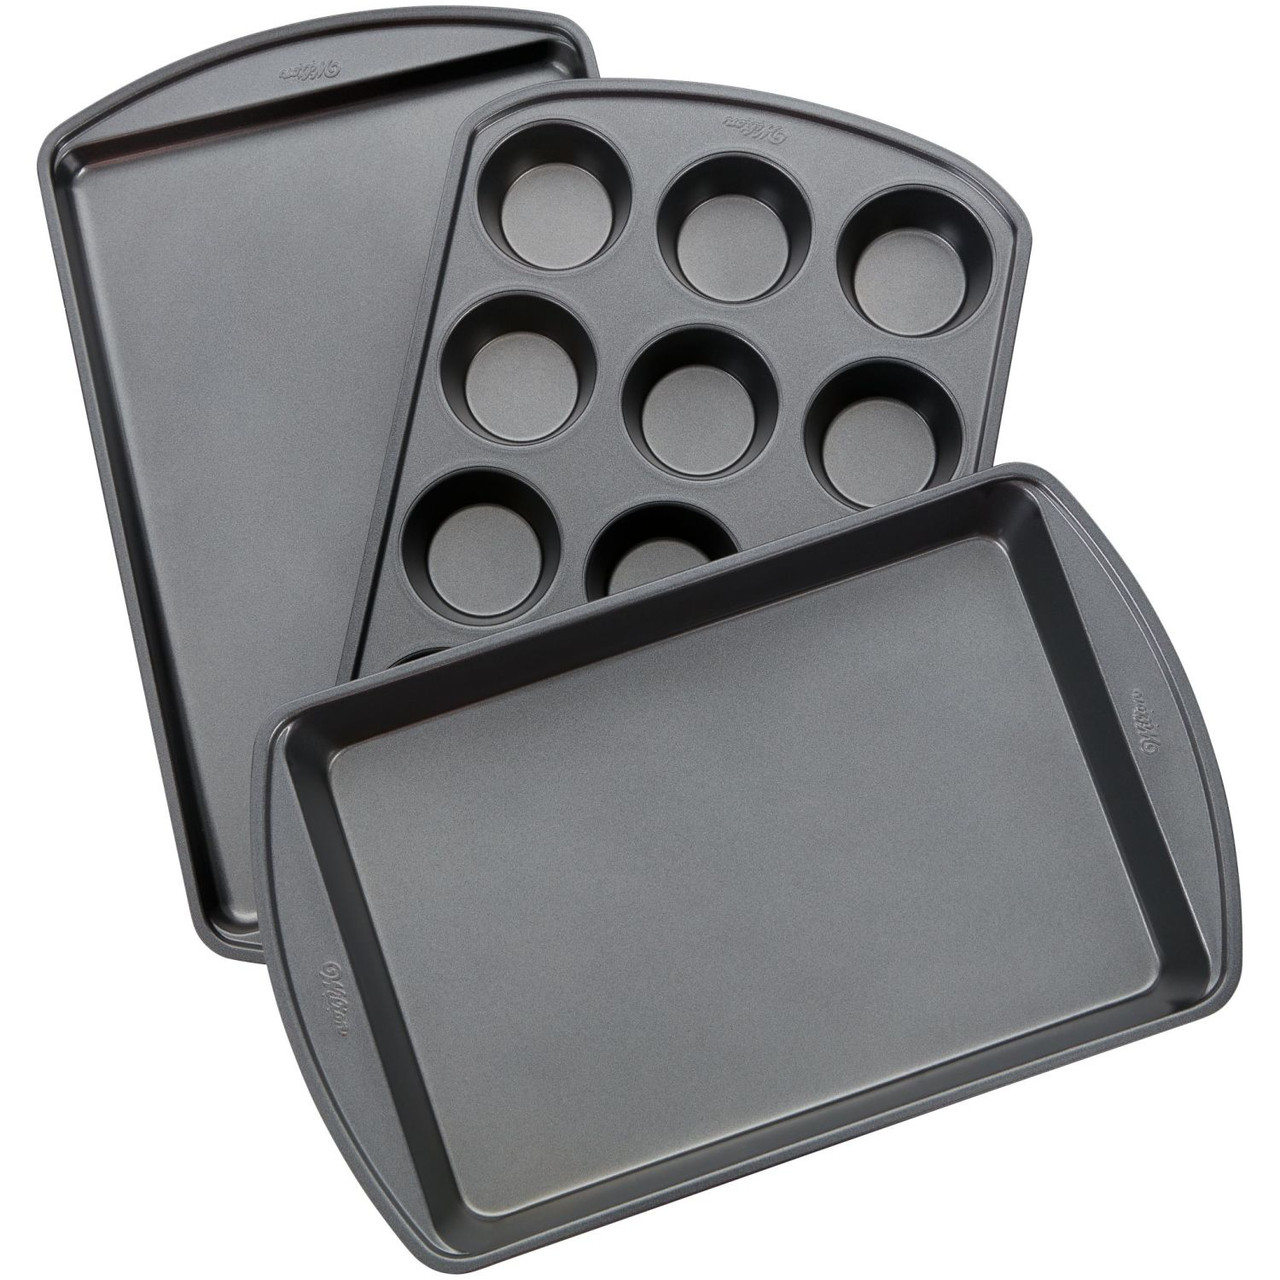 Wilton Perfect Results Square and Oblong Premium Non-Stick Baking Pan Set, 4-Piece